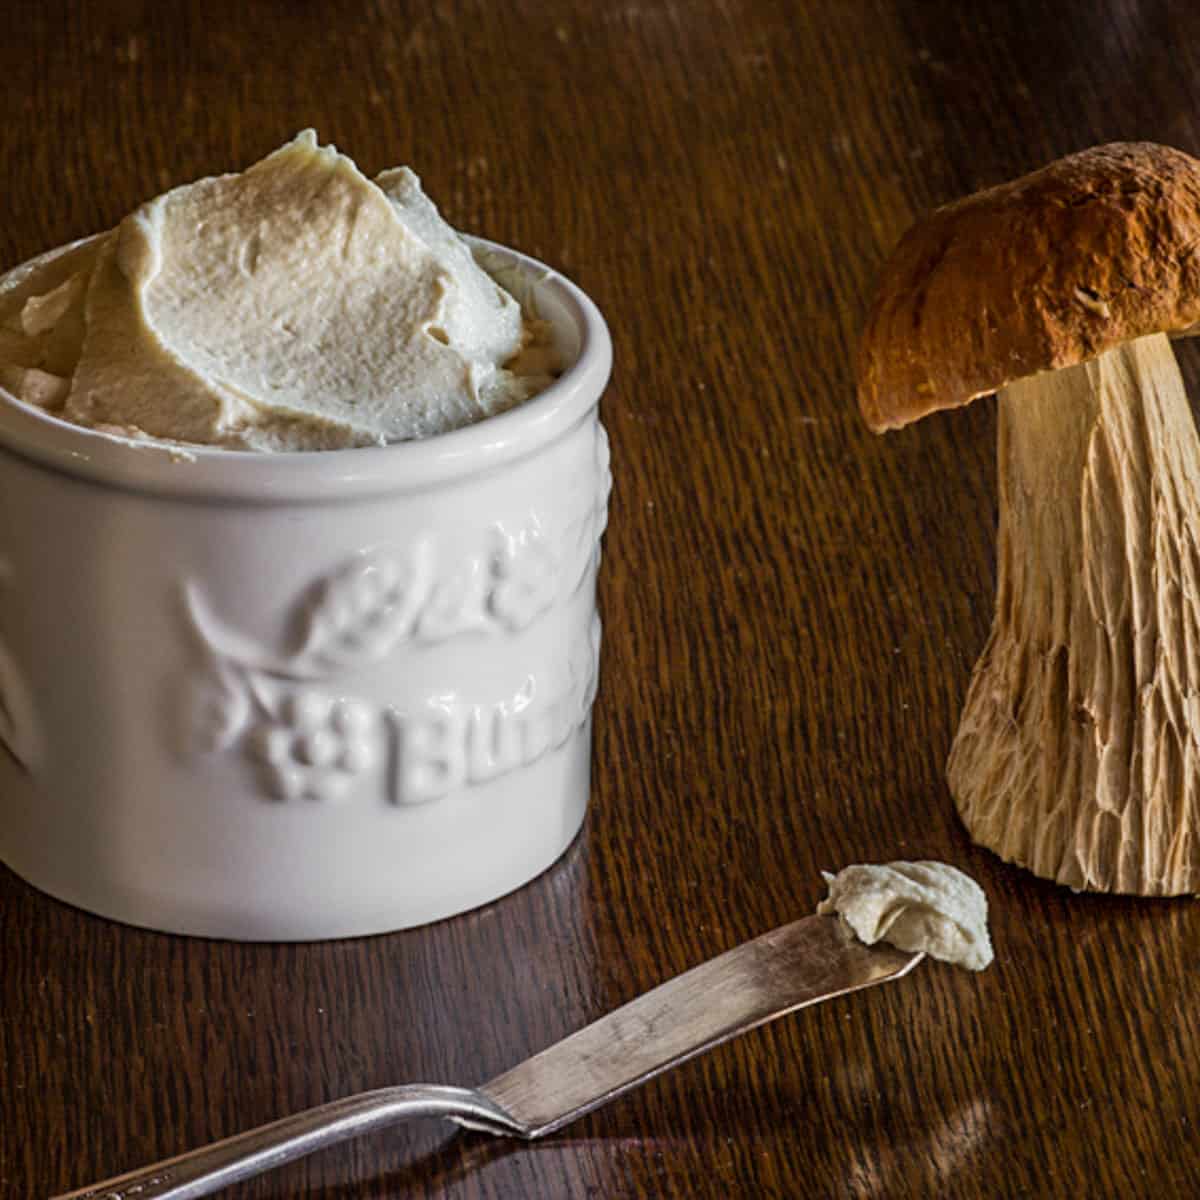 mushroom butter in a crock next to a porcini mushroom